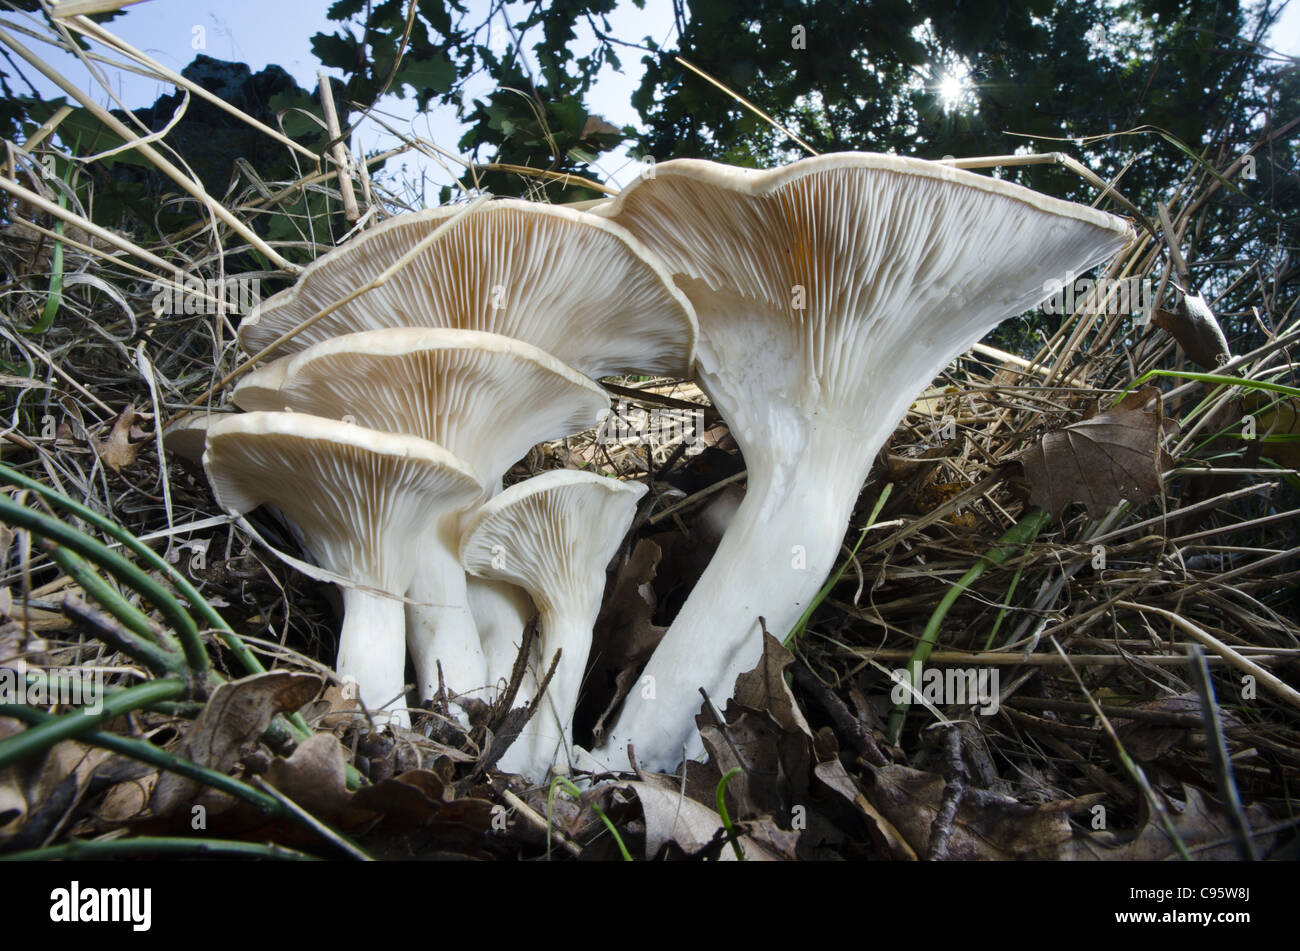 Fresh picked Pleurotus Eryngii straw mushrooms un cooked Stock Photo - Alamy